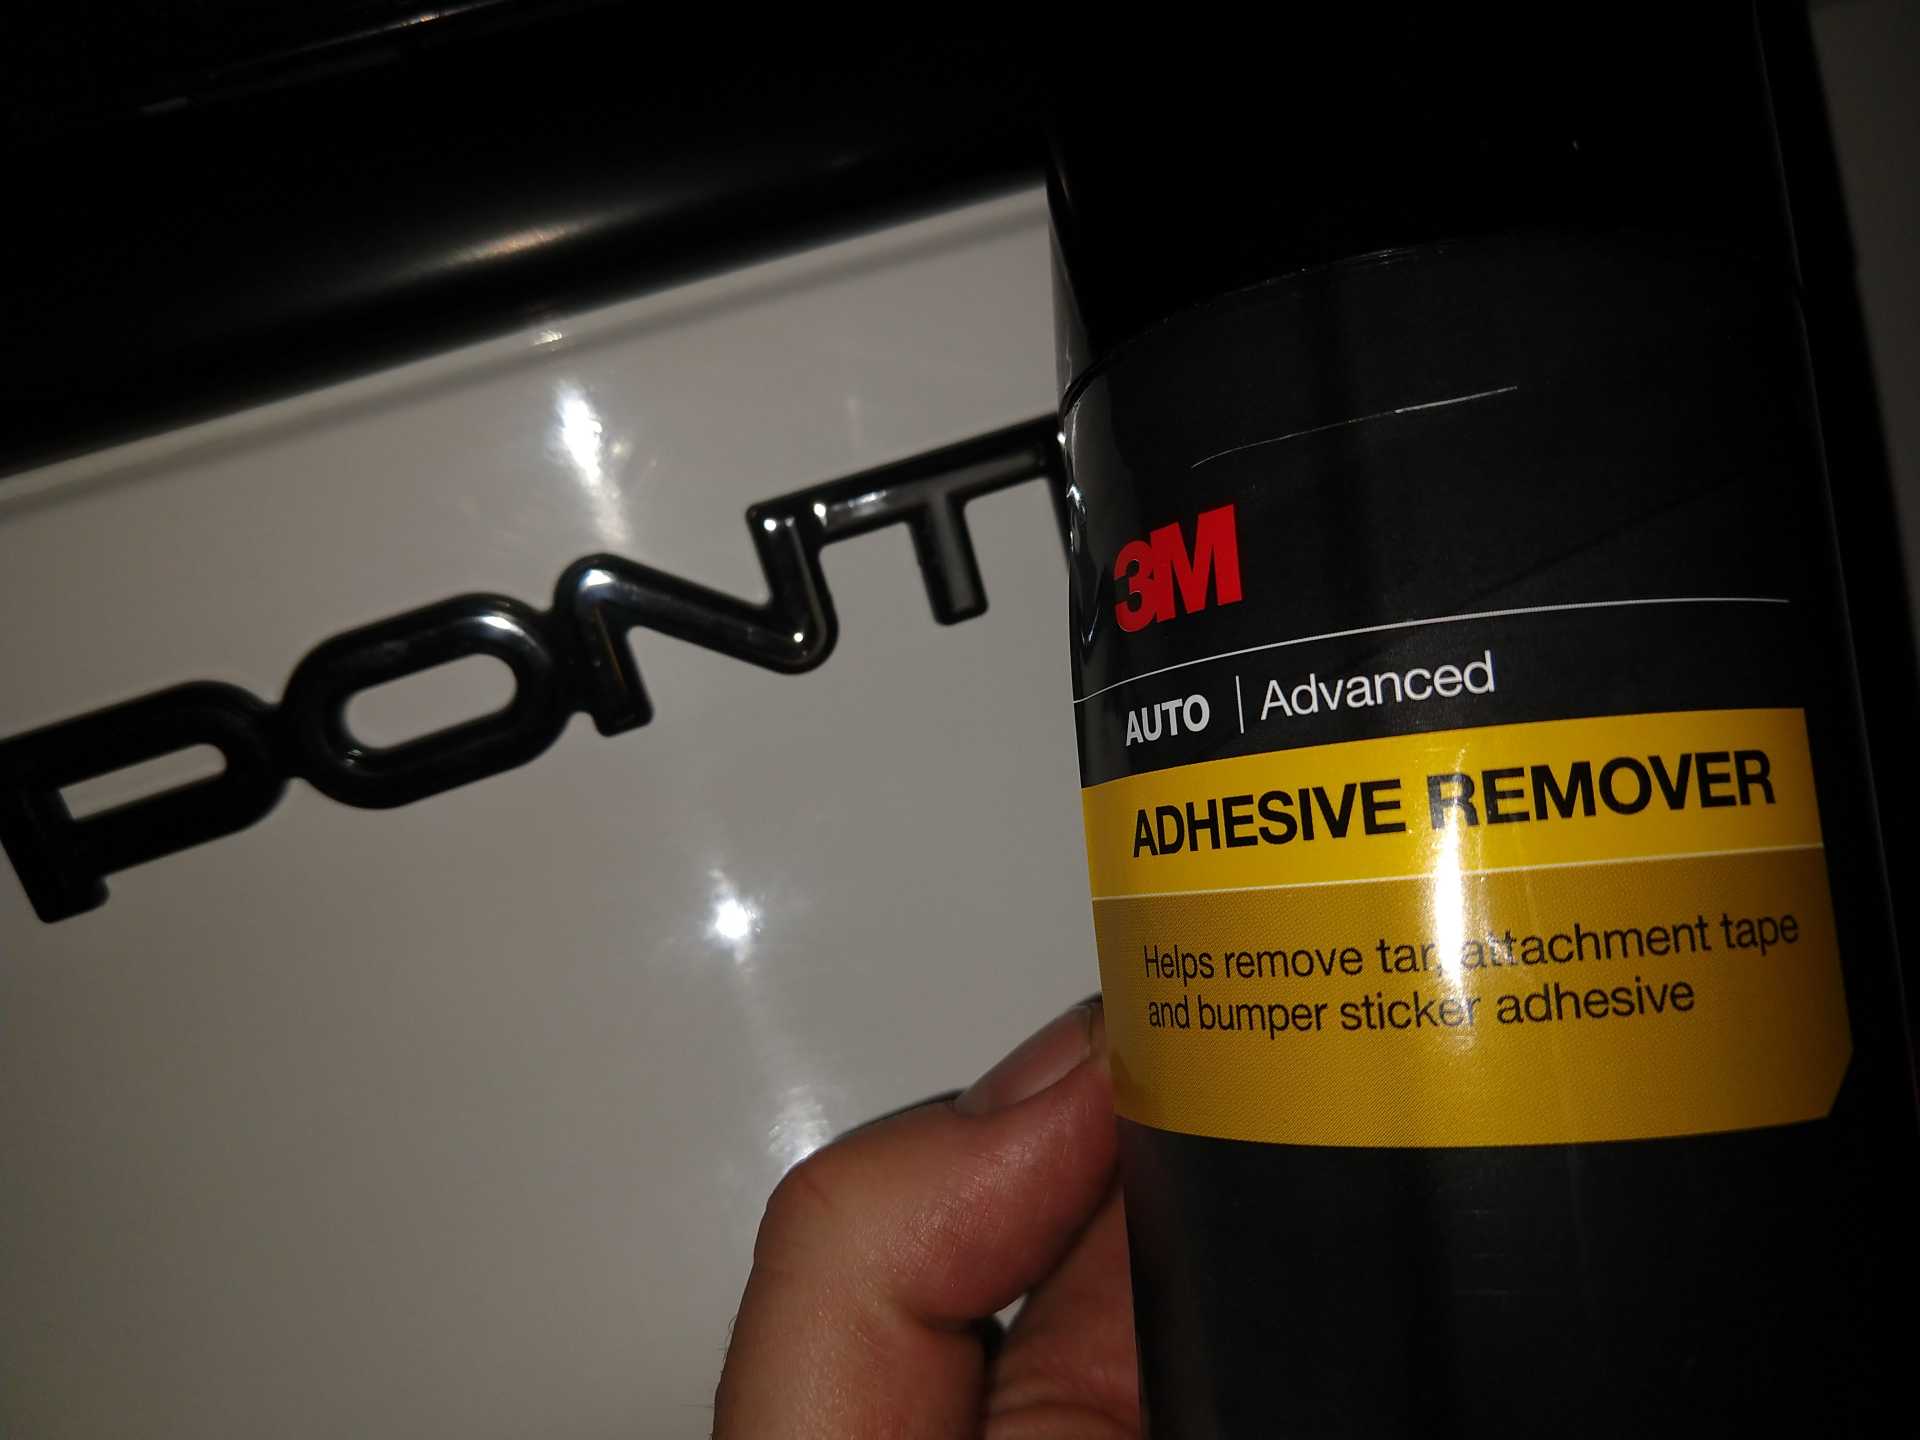  3M Adhesive Remover, Helps Remove Tar, Attachment Tape